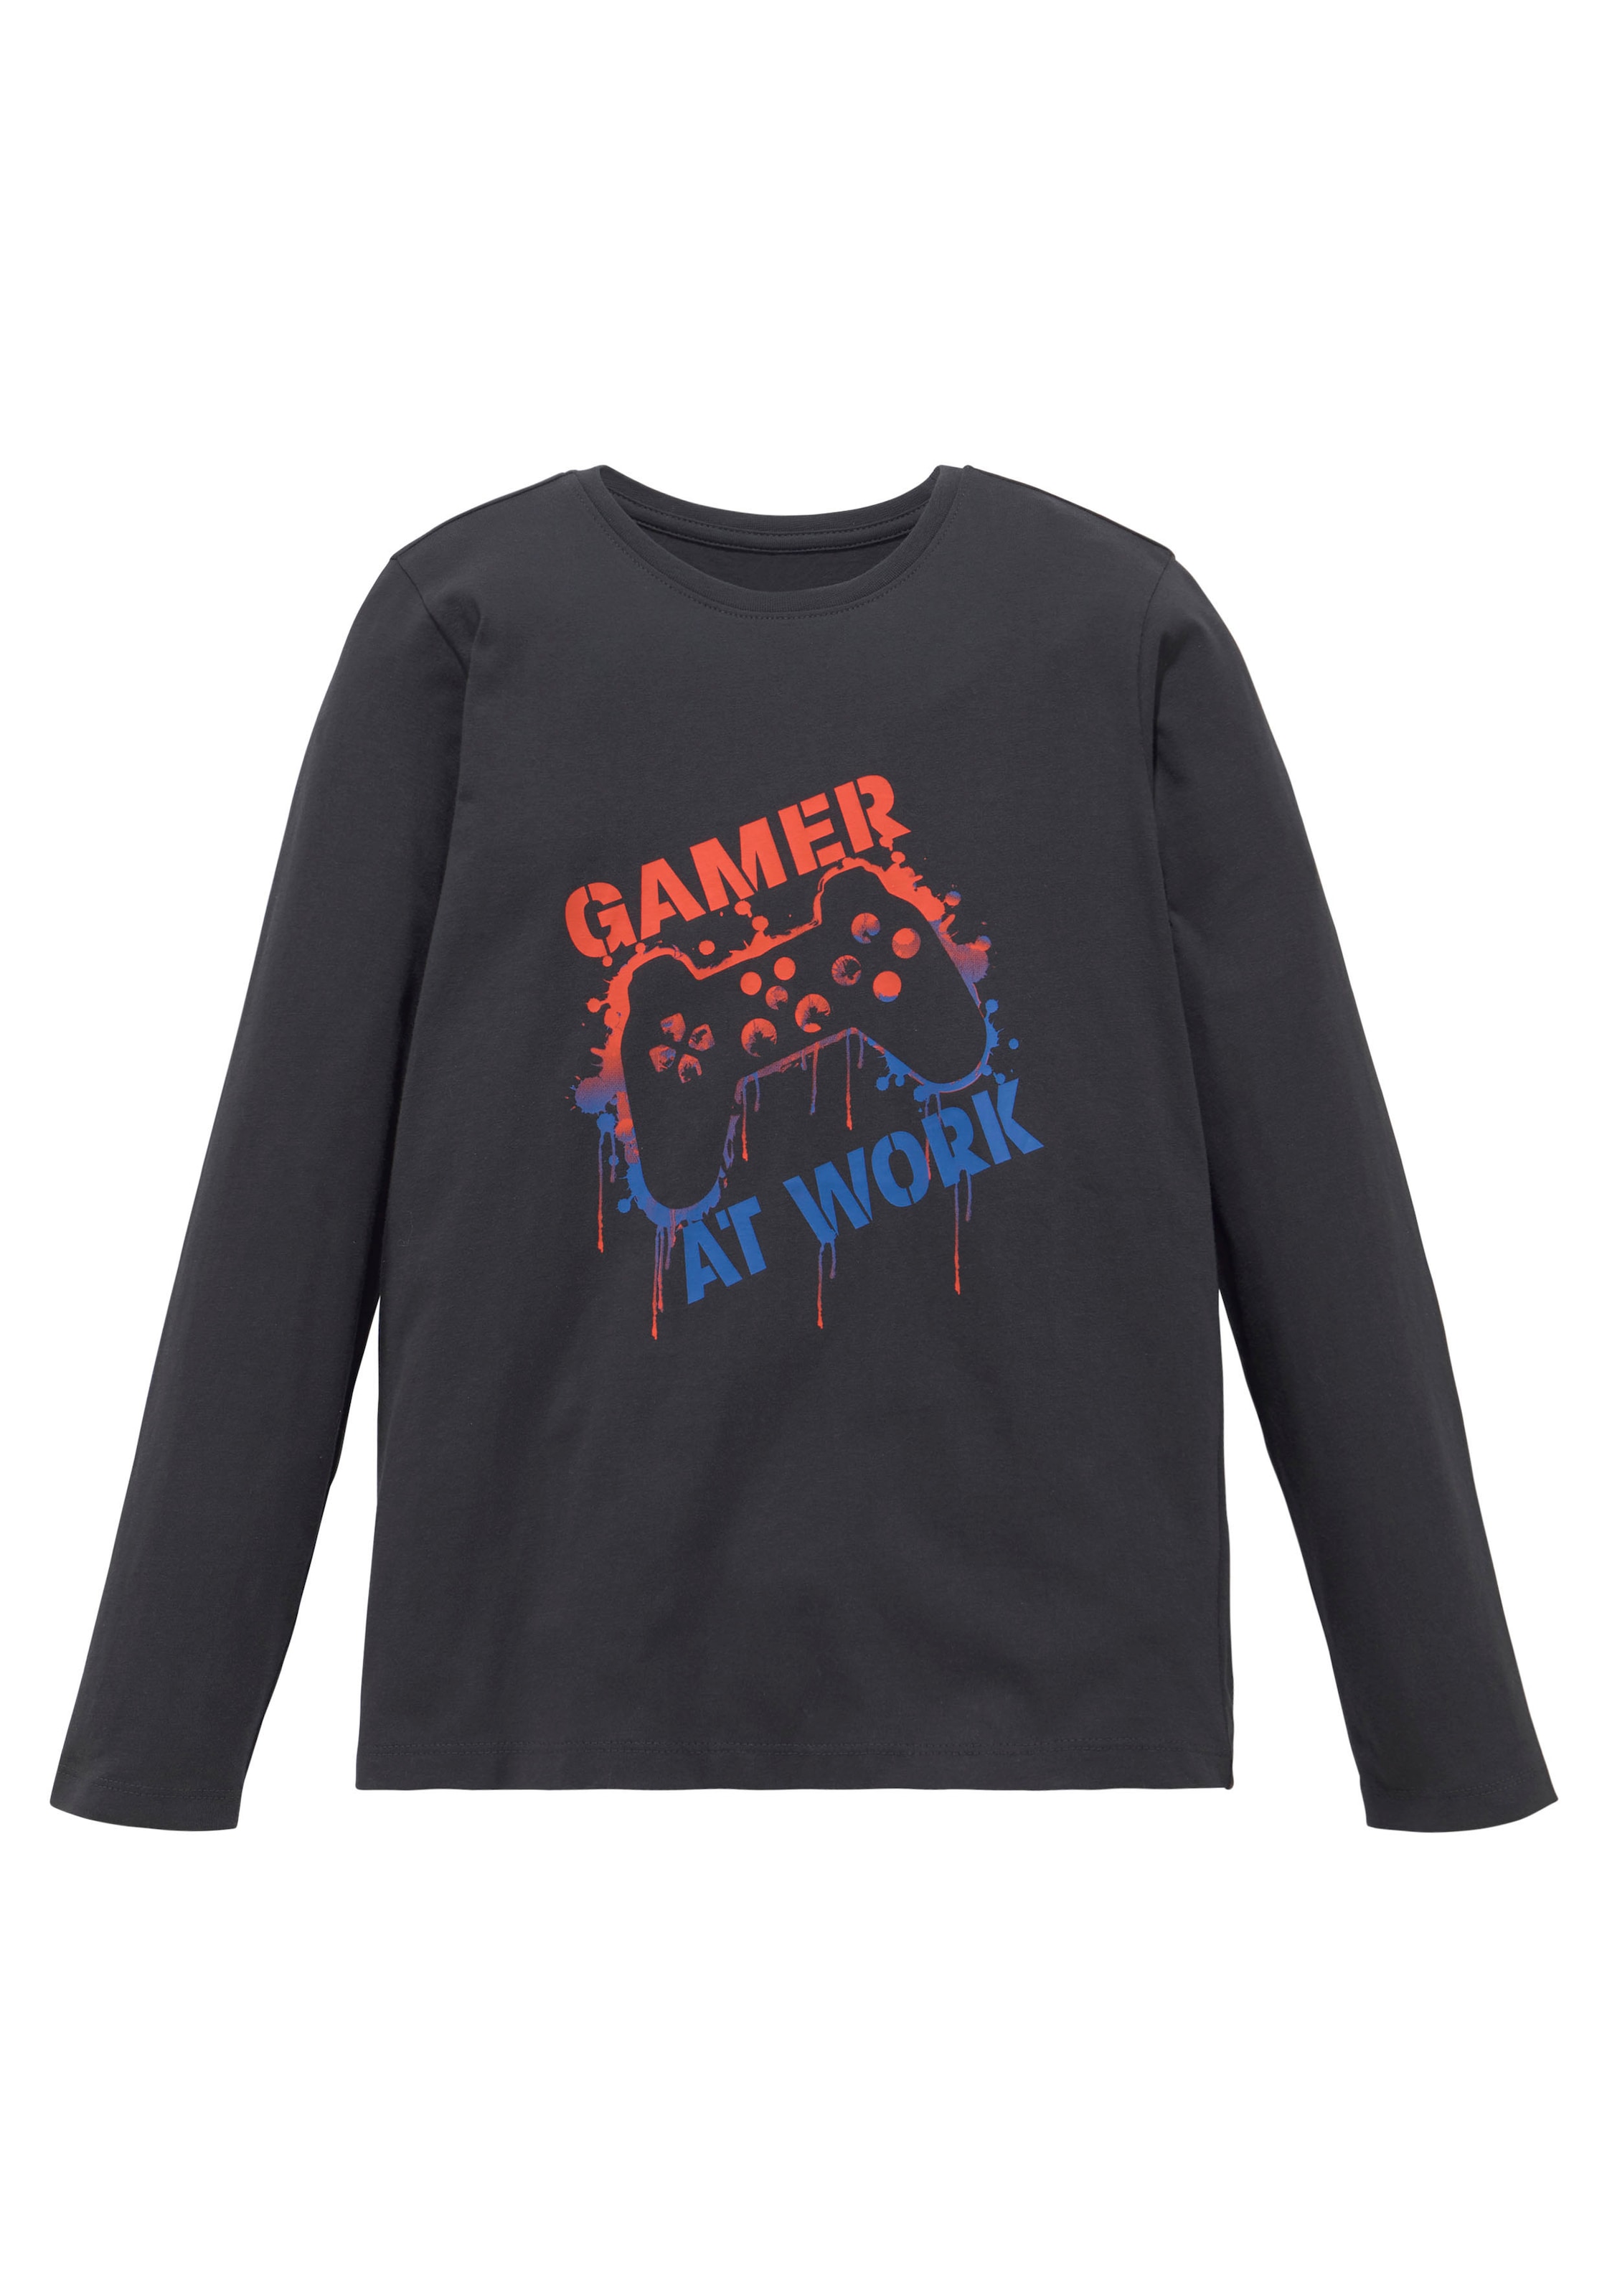 KIDSWORLD Langarmshirt »GAMER AT WORK« kaufen online